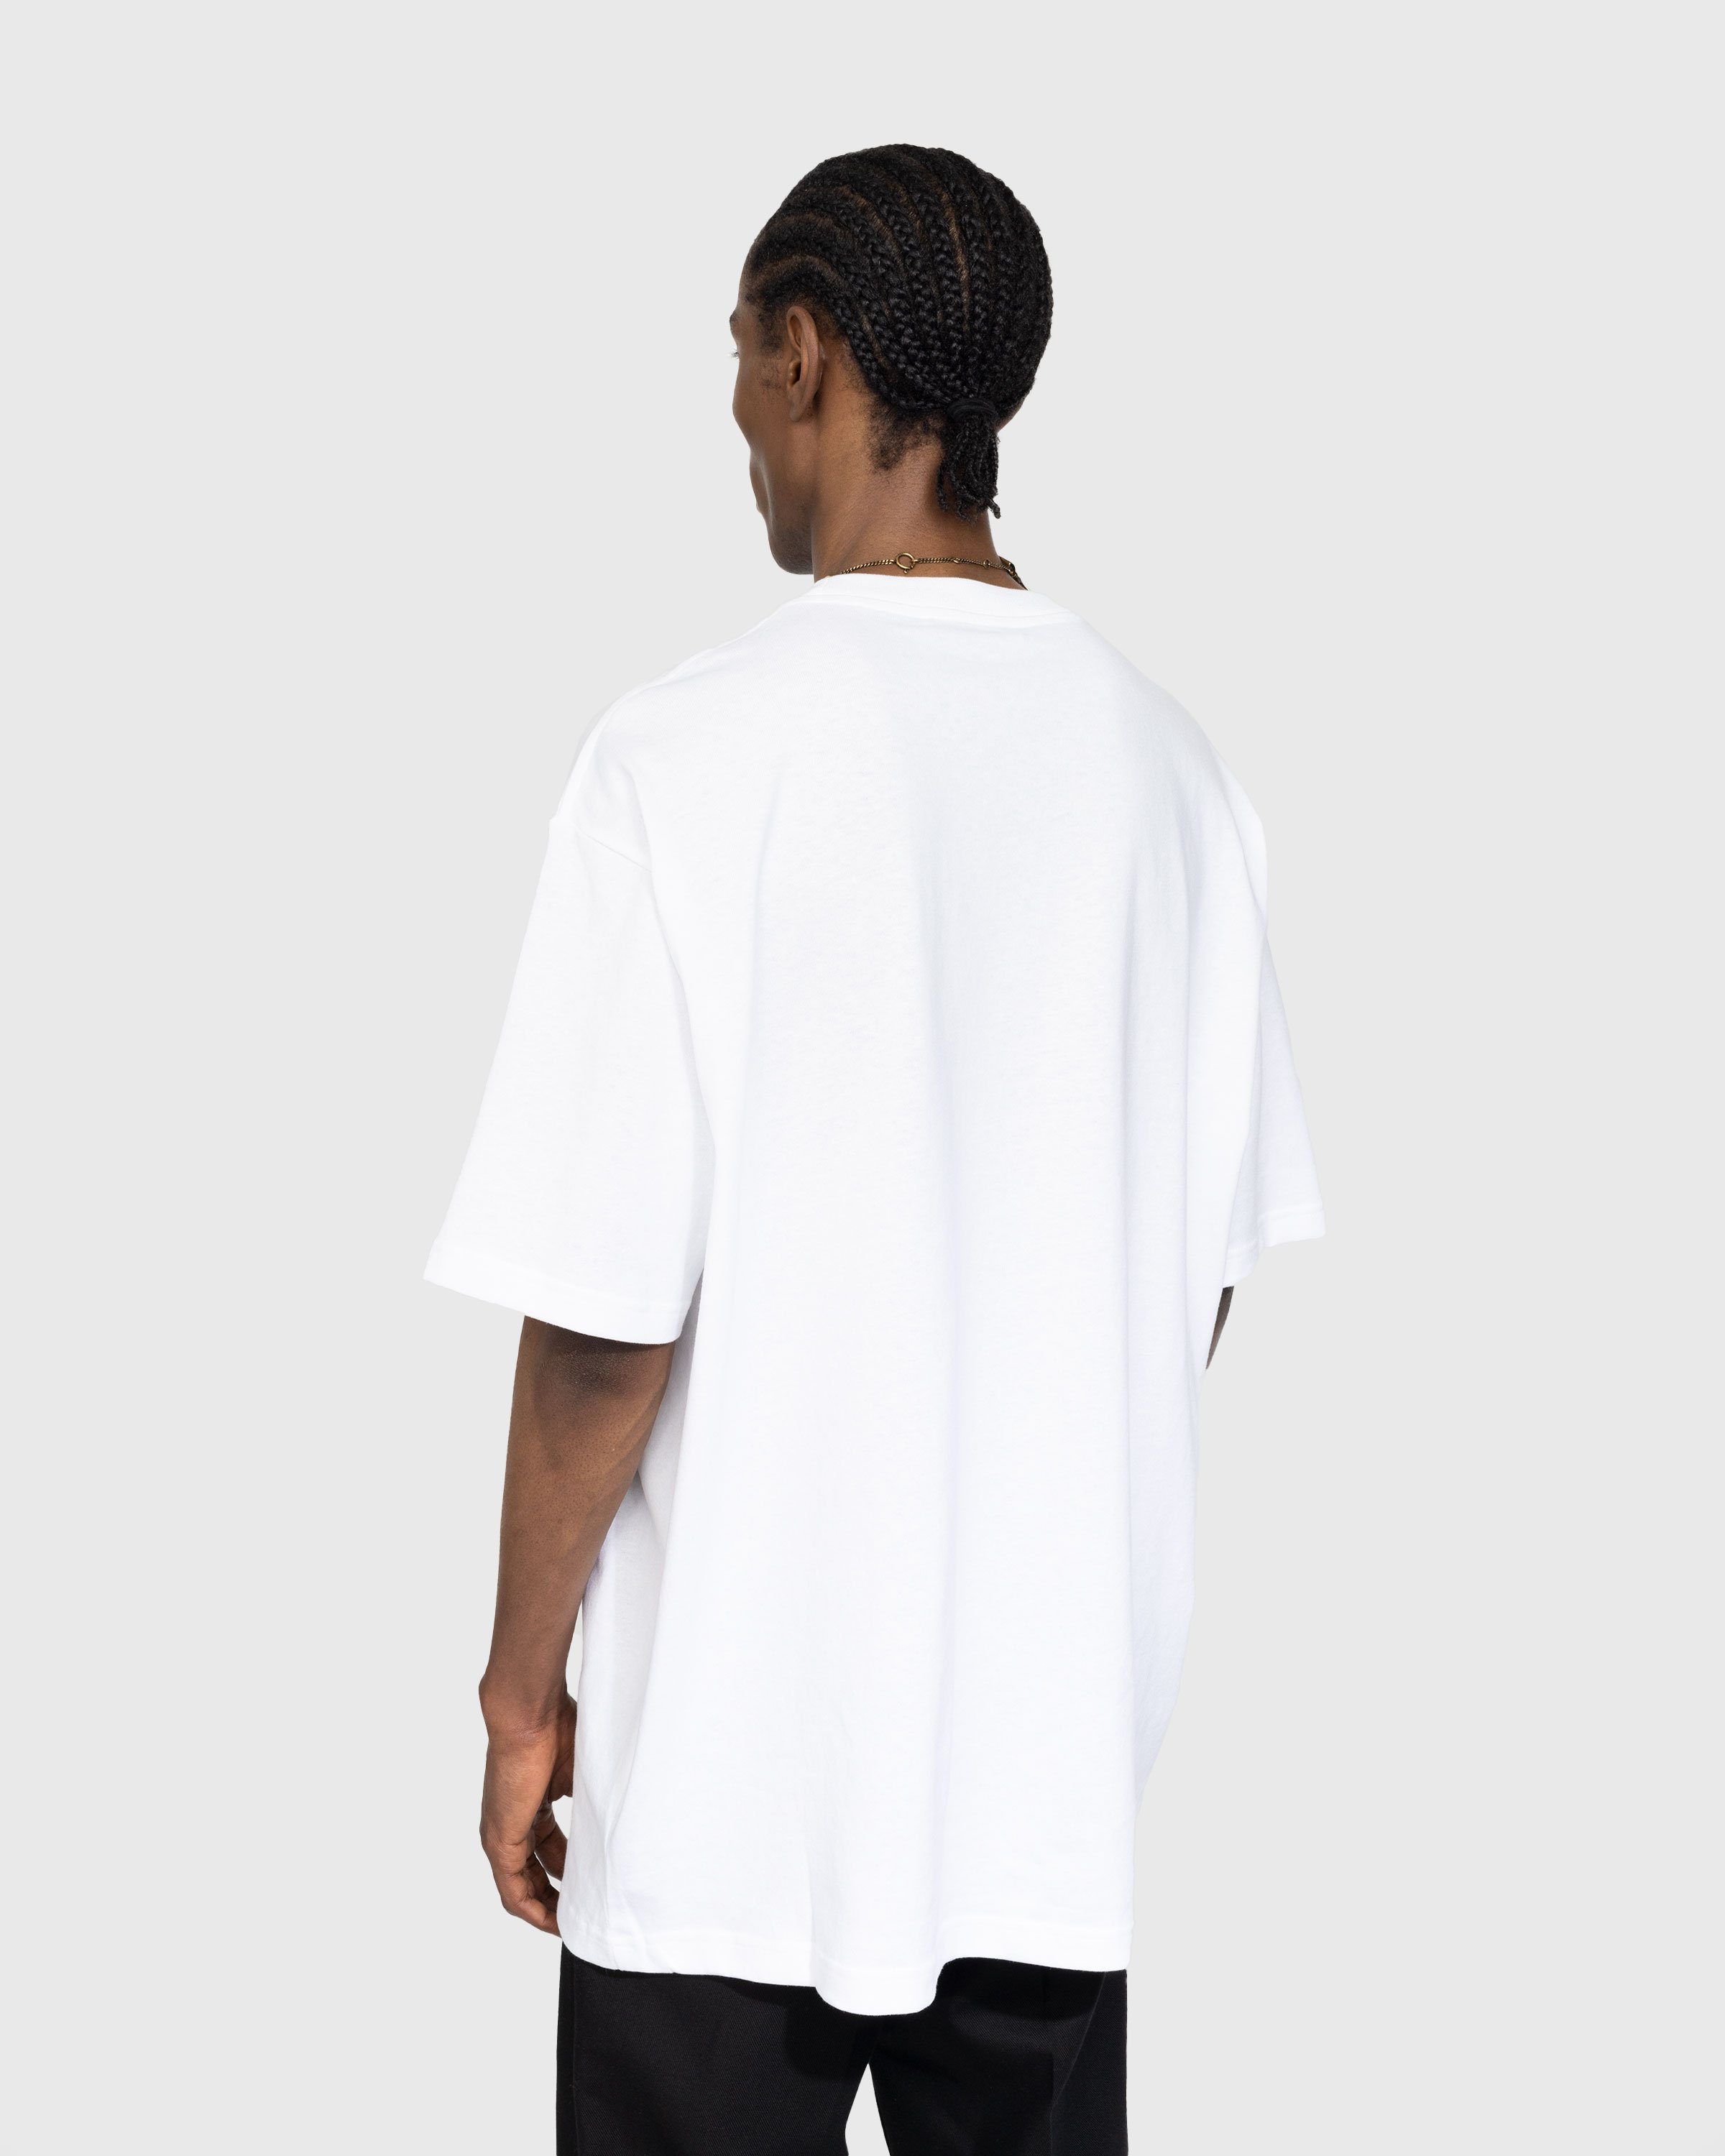 Acne Studios - Floragatan 13 Screenprint T-Shirt White - Clothing - White - Image 4